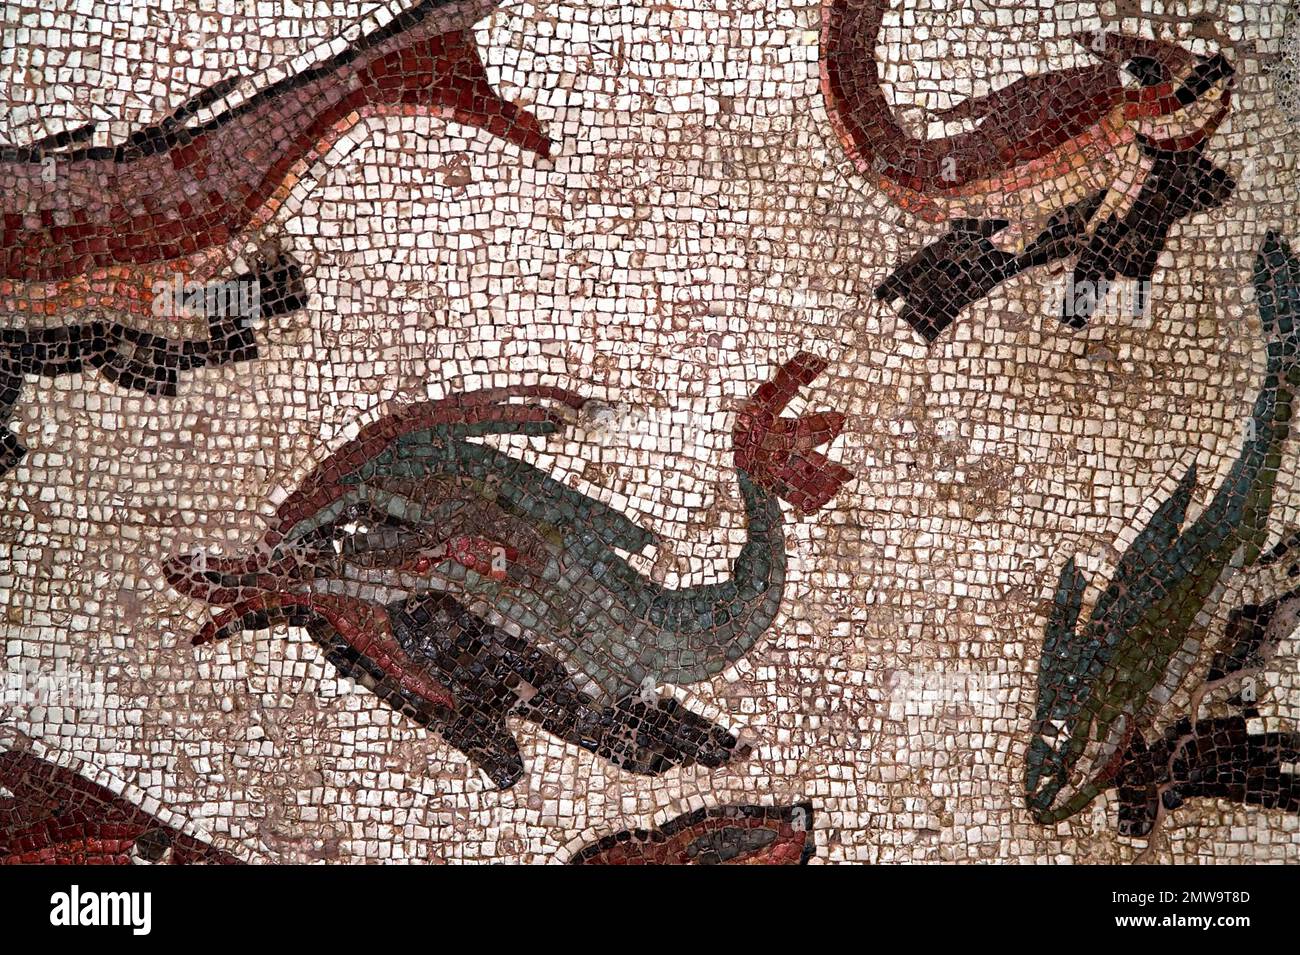 Paryż, Paris, Louvre Museum, Francja, France, Frankreich, Ancient mosaic - fragment; Antikes Mosaik - Fragment; Mosaico antiguo - fragmento; 古代馬賽克 Stock Photo